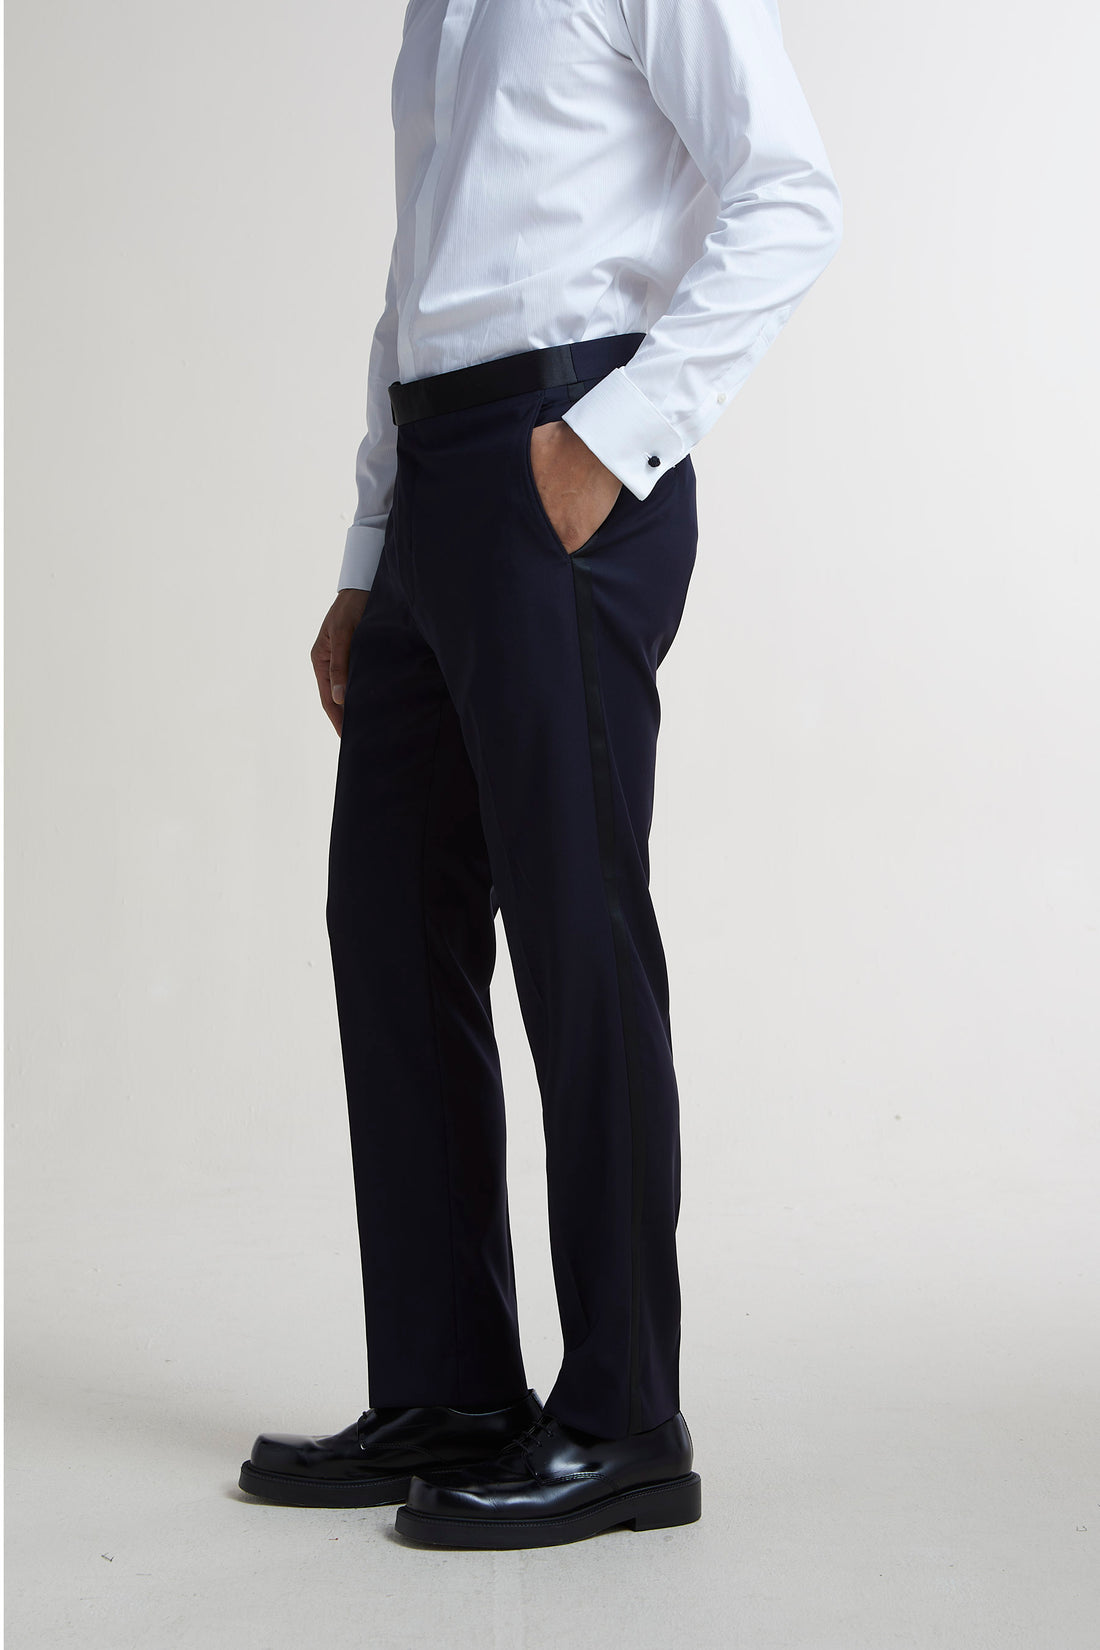 Navy Blue Damask Peak Lapel Tuxedo Suit w/ Black wool Pants – ROGUE NG